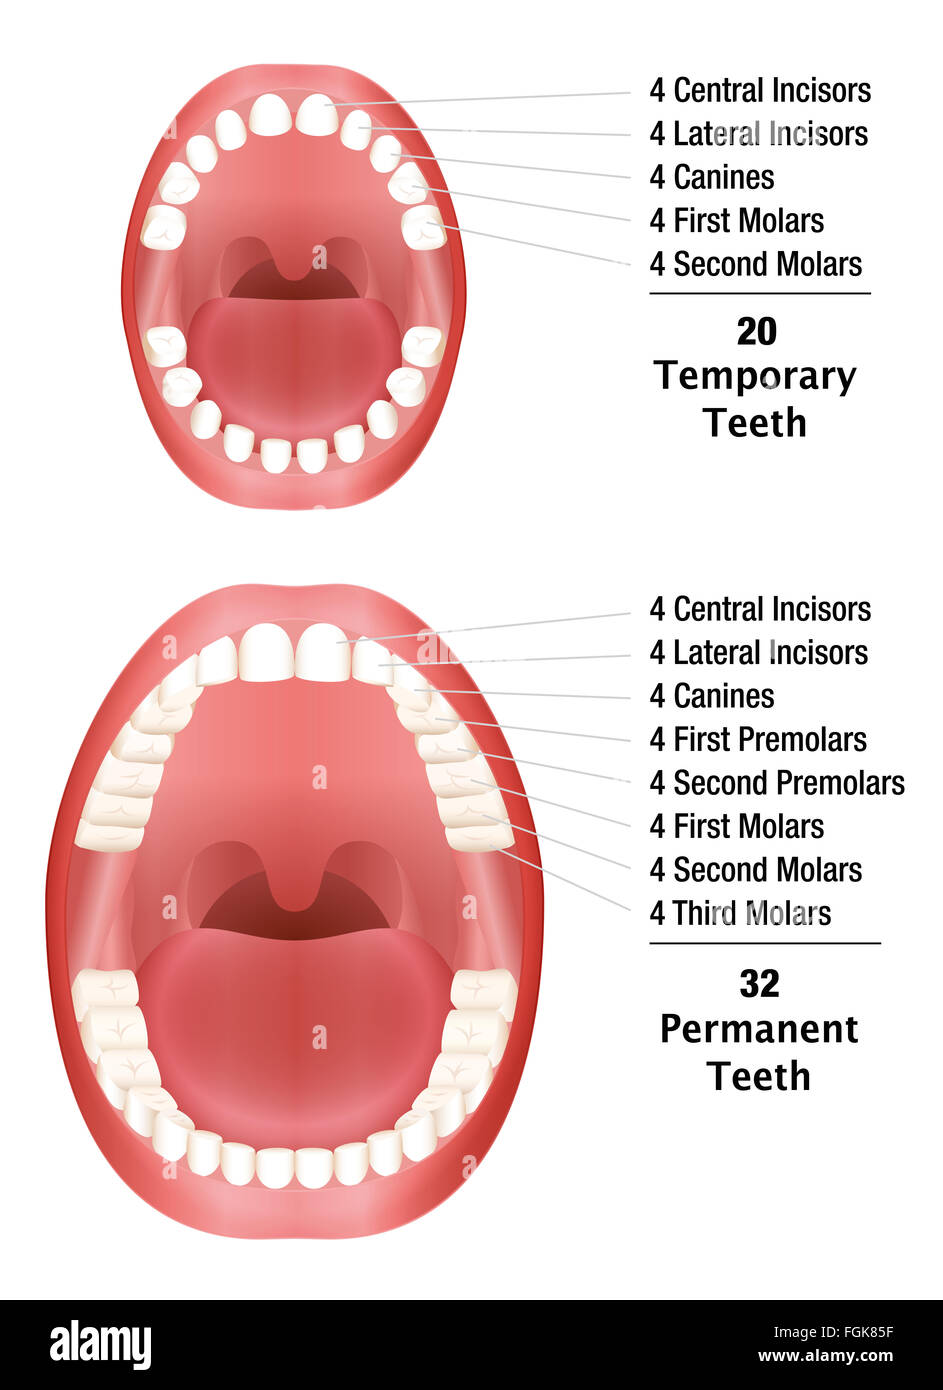 Temporary Teeth - Permanent Teeth - Number of milk teeth and adult teeth. Illustration on white background. Stock Photo